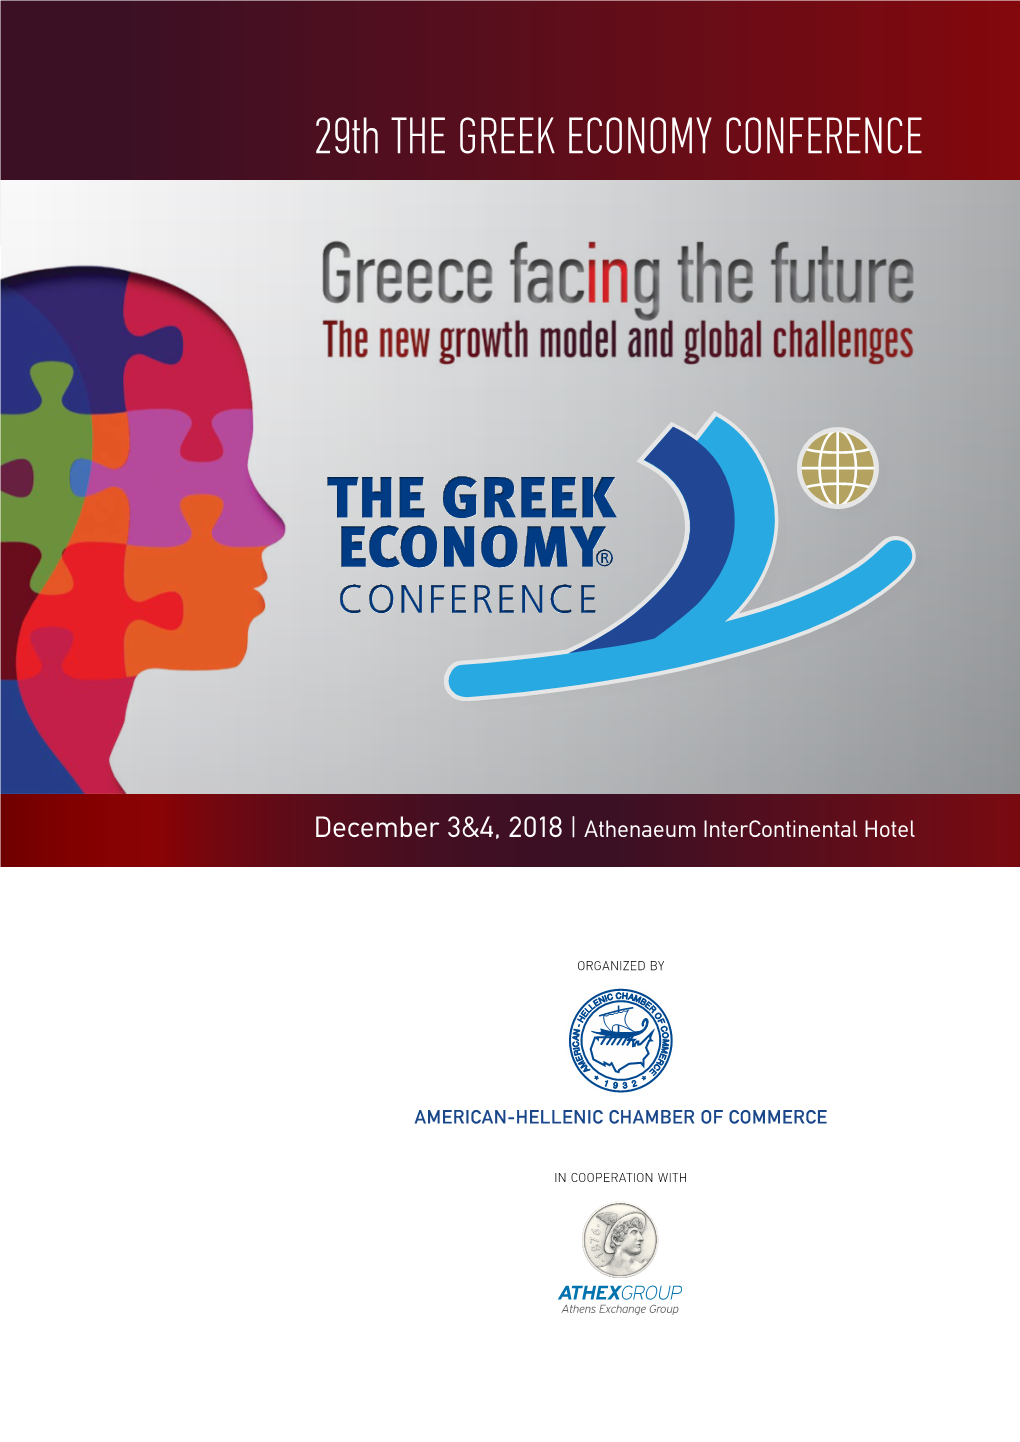 The Greek Economy® the Greek Economy®